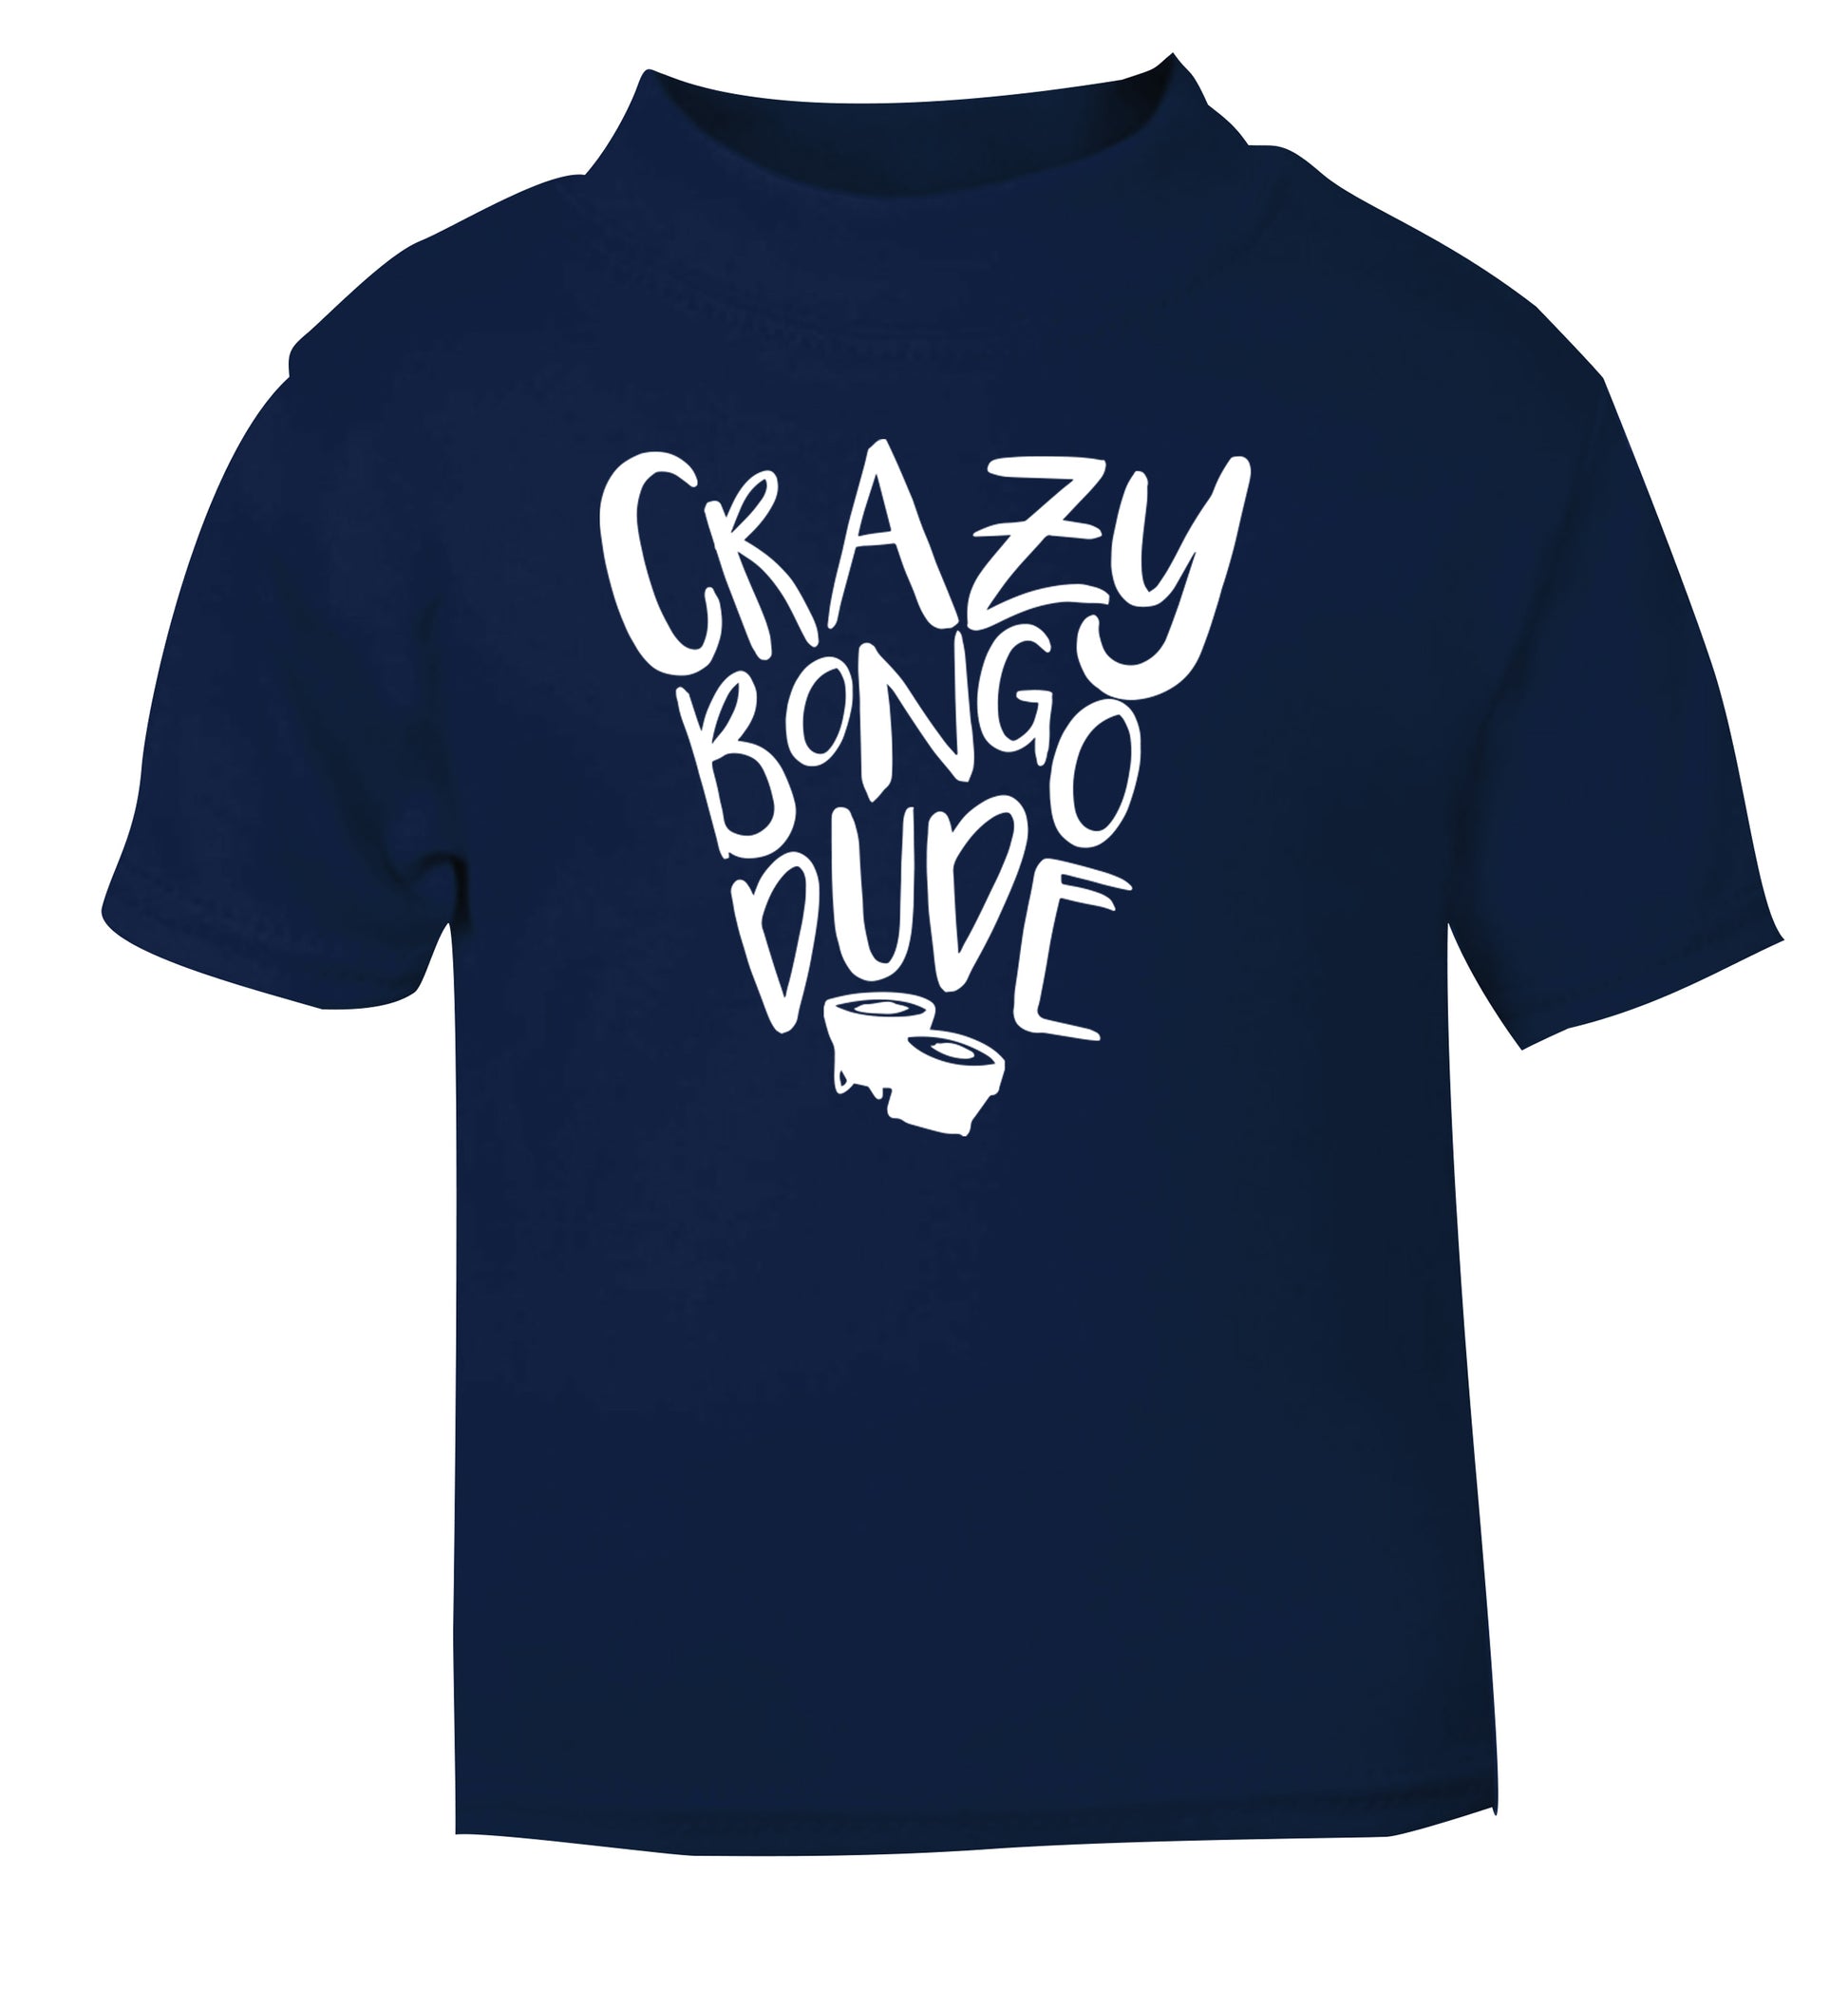 Crazy bongo dude navy Baby Toddler Tshirt 2 Years